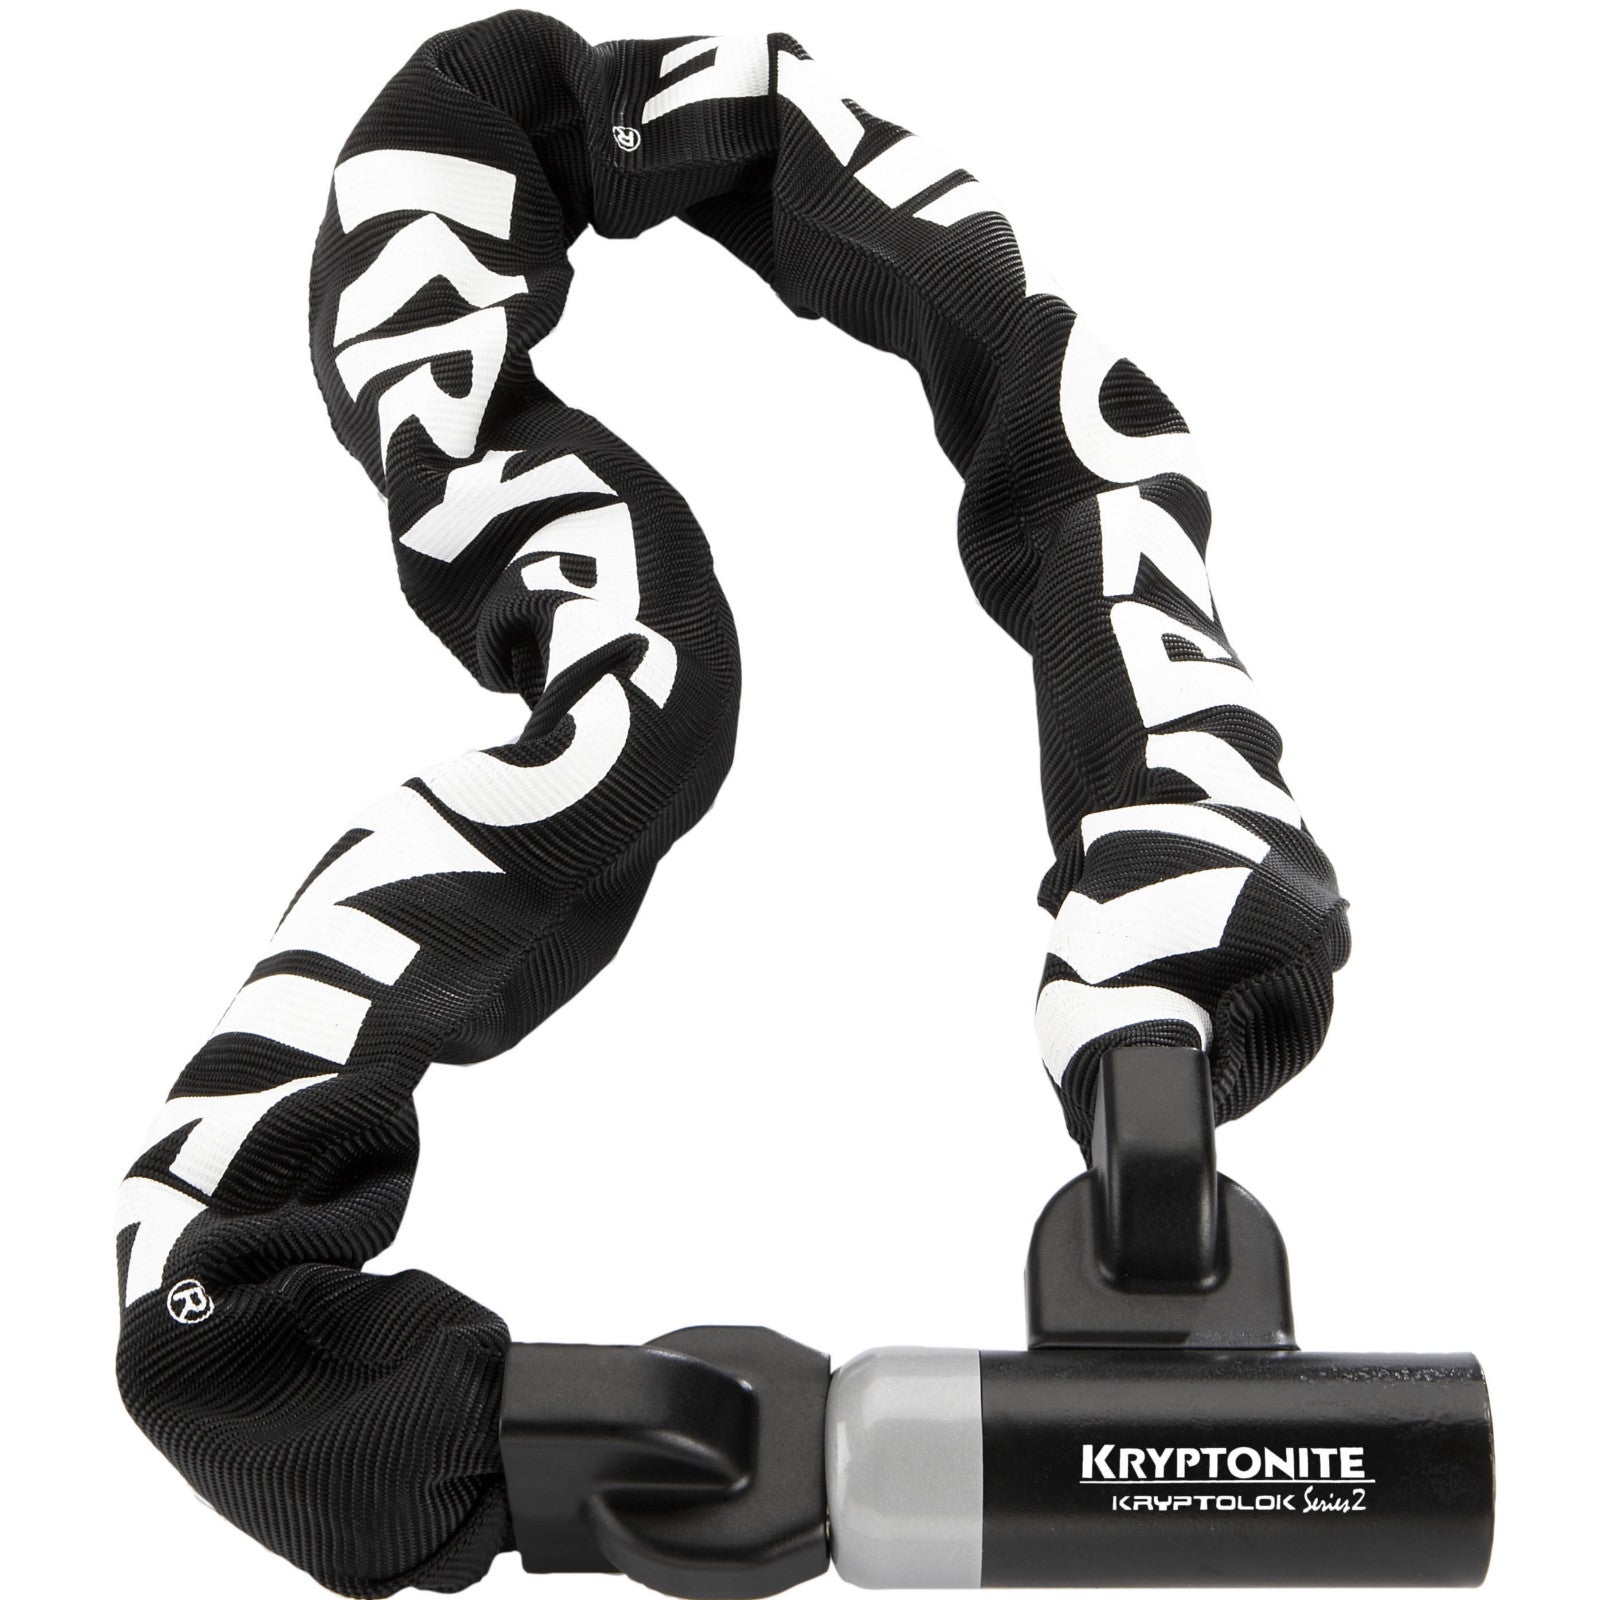 Kryptonite Kryptolok 955 9.5mm 95cm Integrated Bike Chain Lock